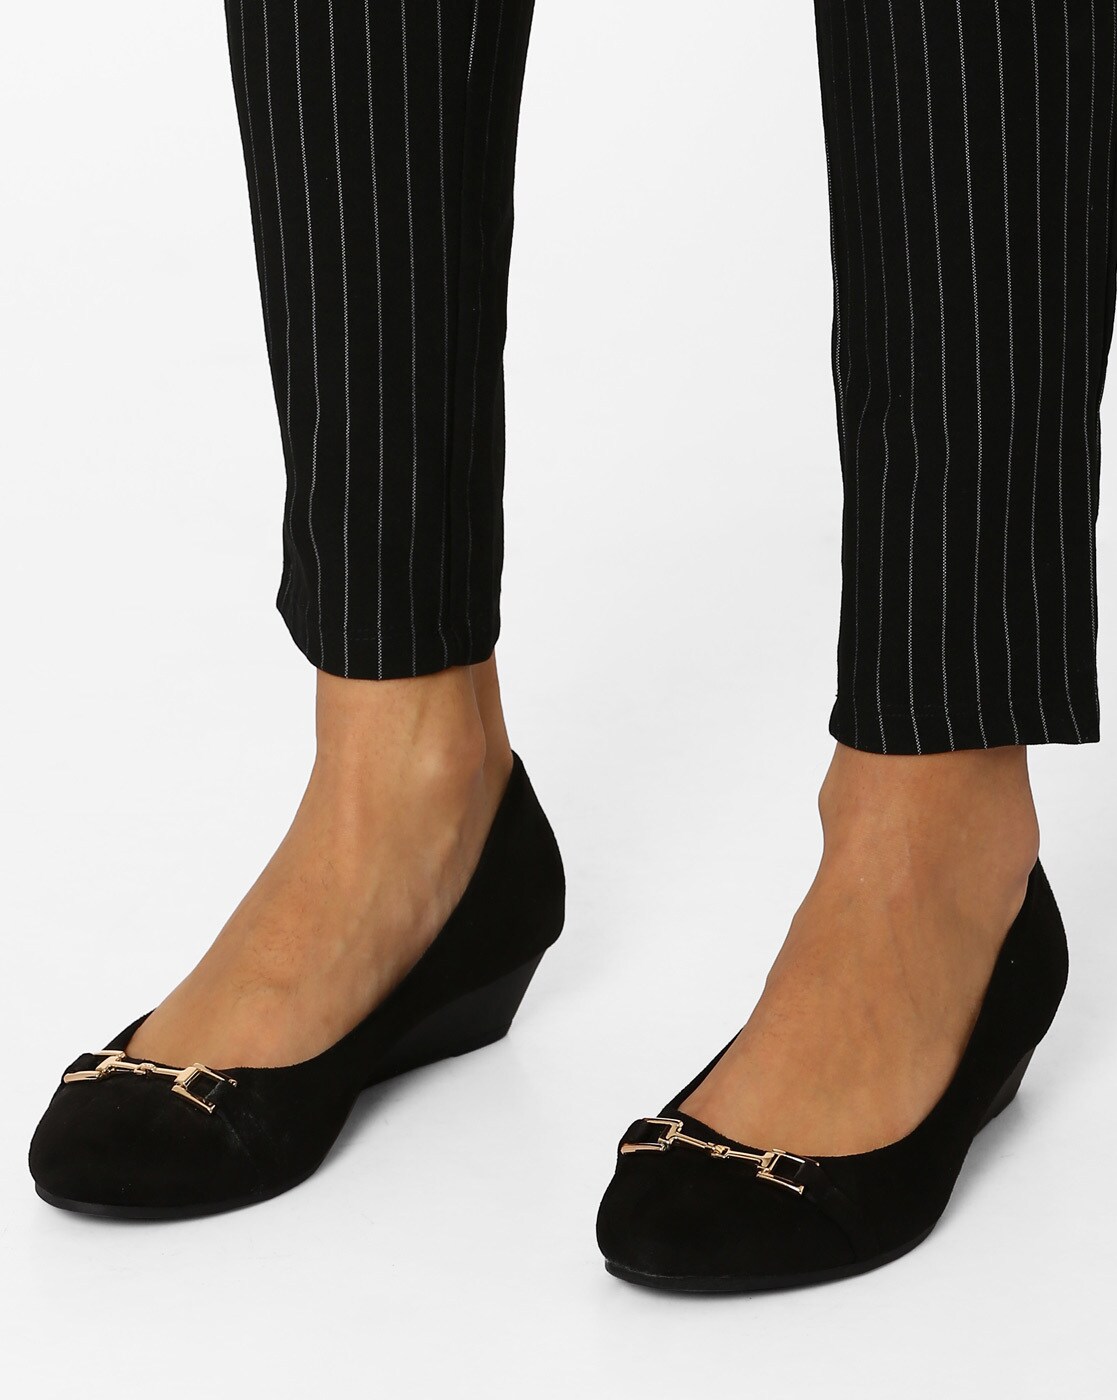 tresmode black heels